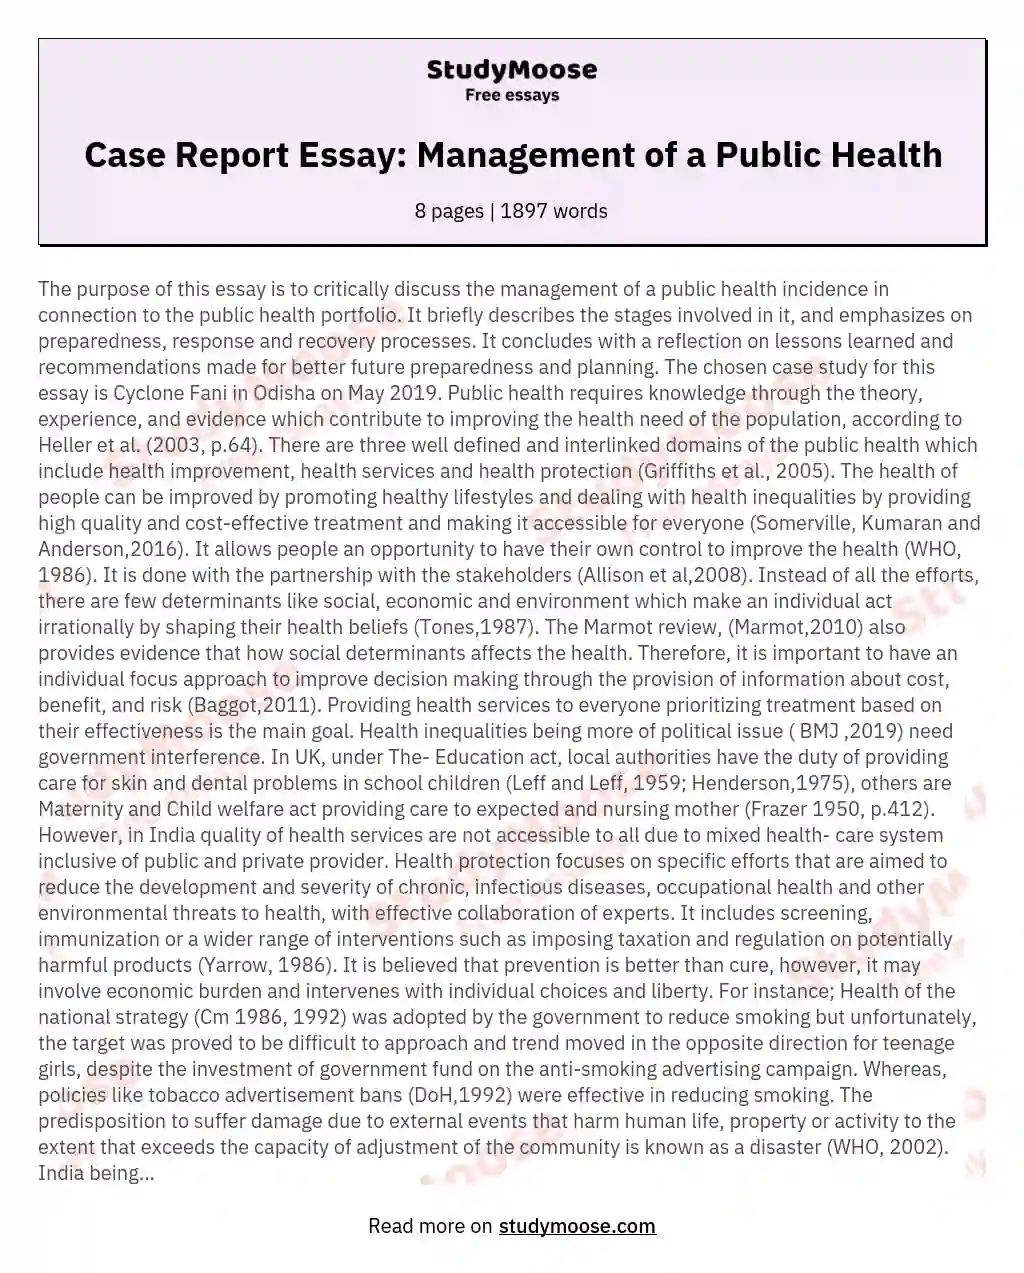 Case Report Essay: Management of a Public Health essay